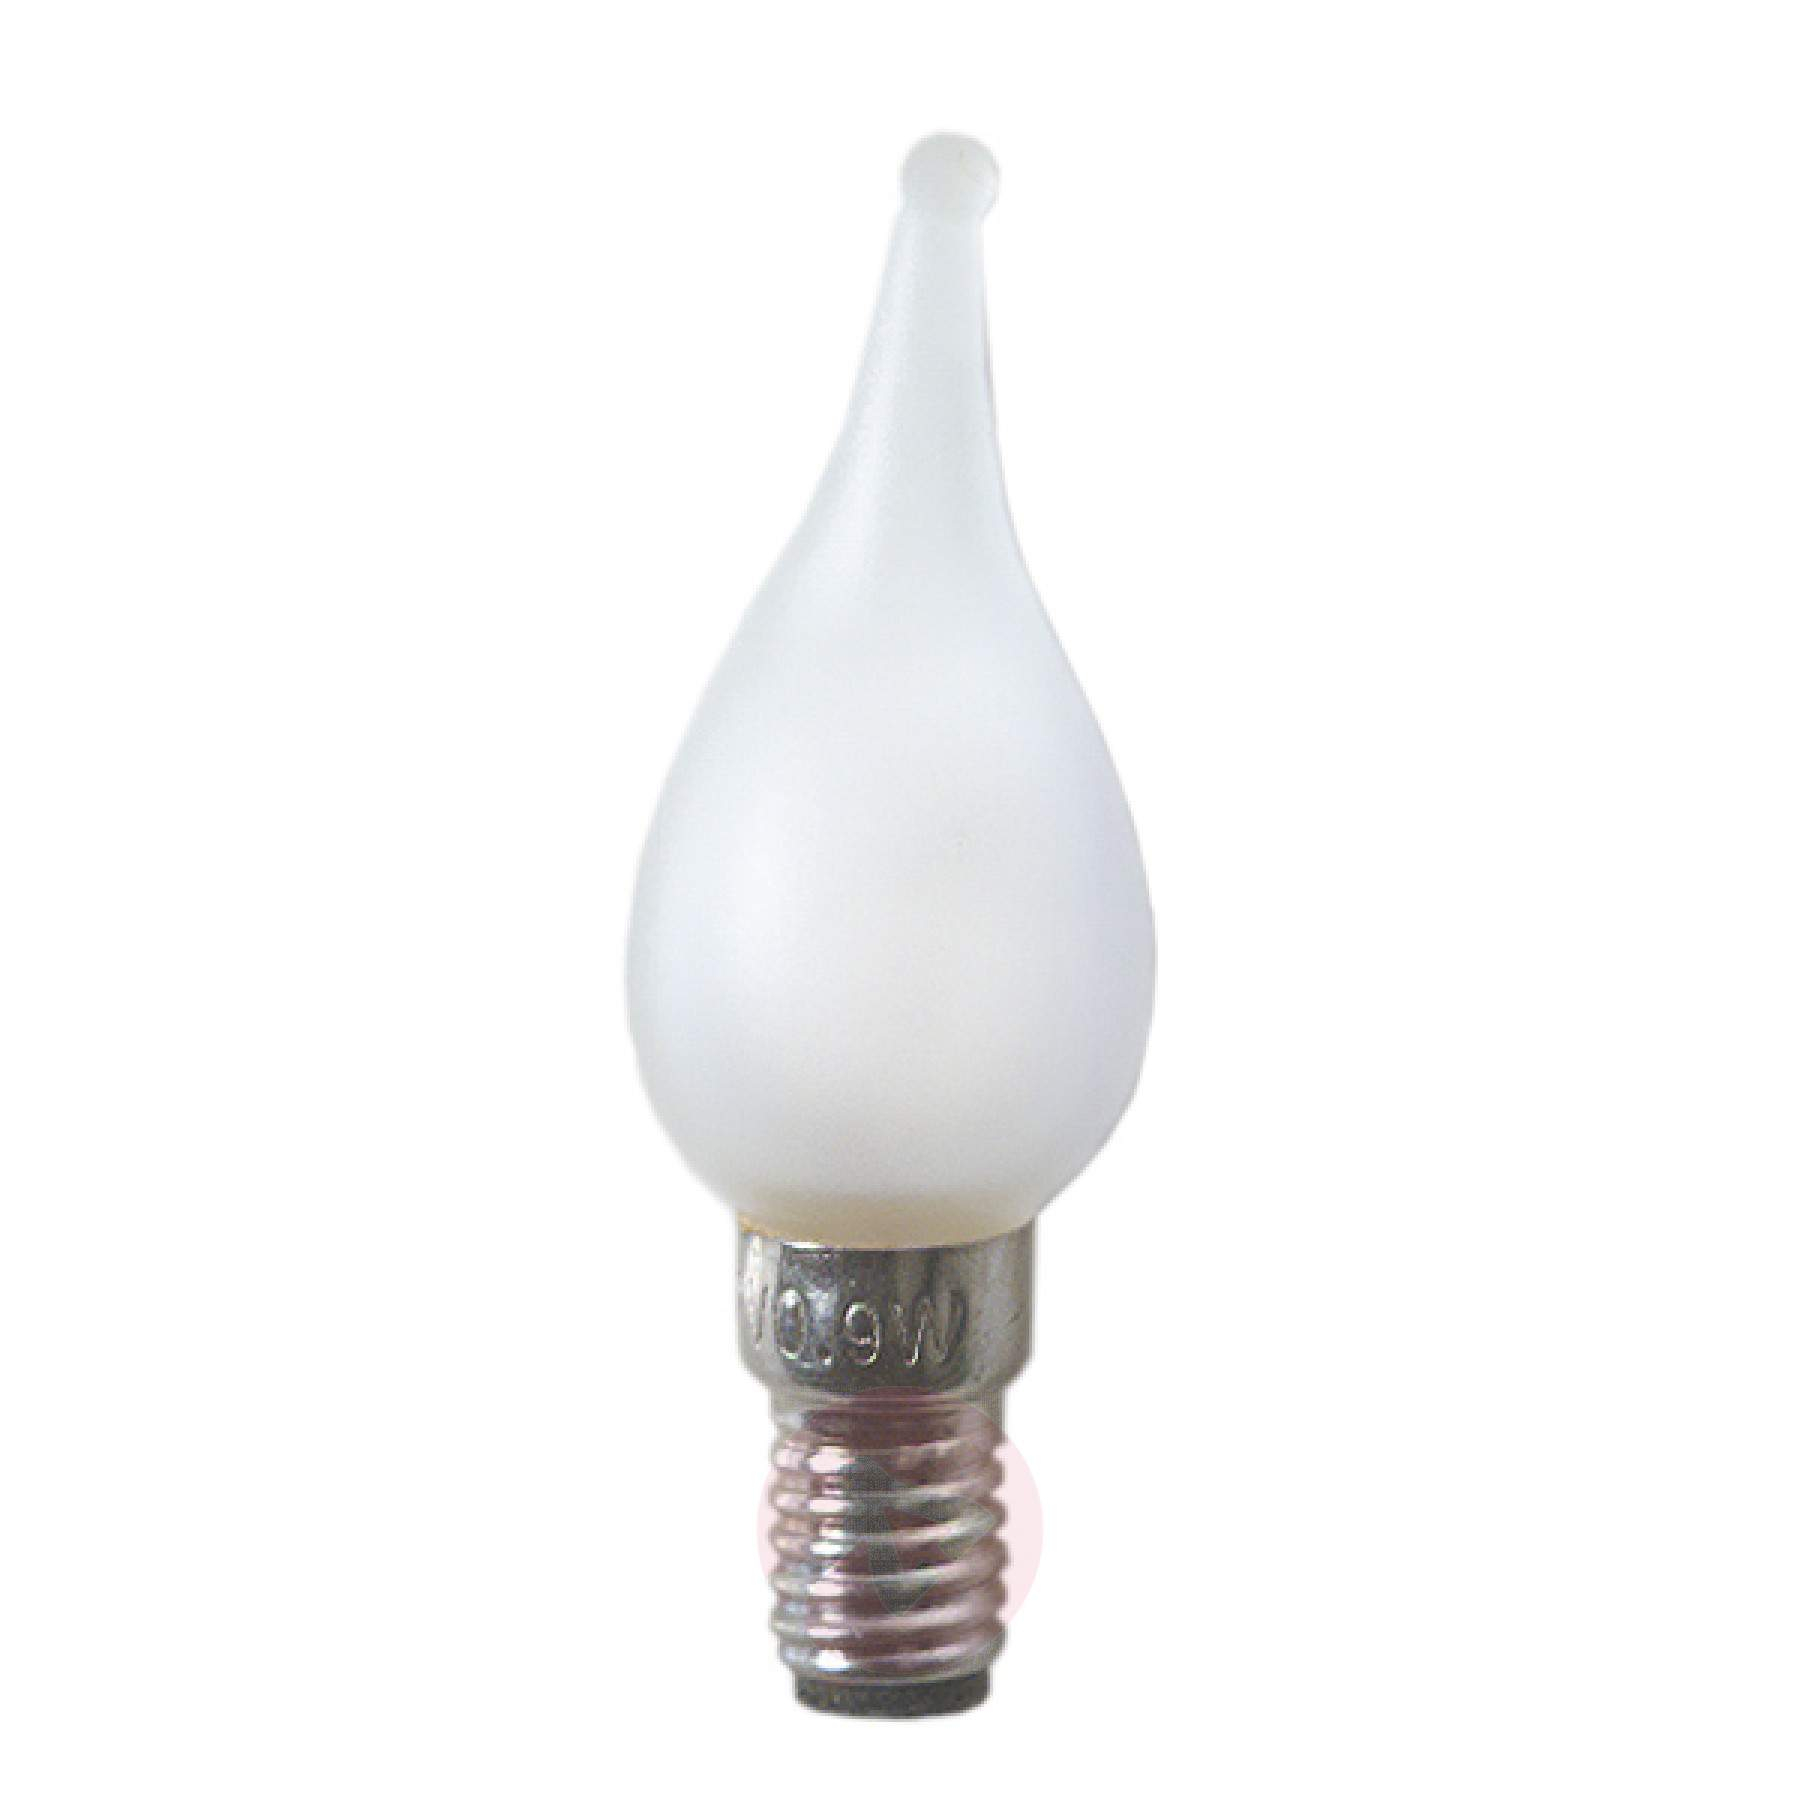 E6 09 W 12 V Bulbs Lv Window Candle Set Of 3 Lightscouk regarding size 1800 X 1800